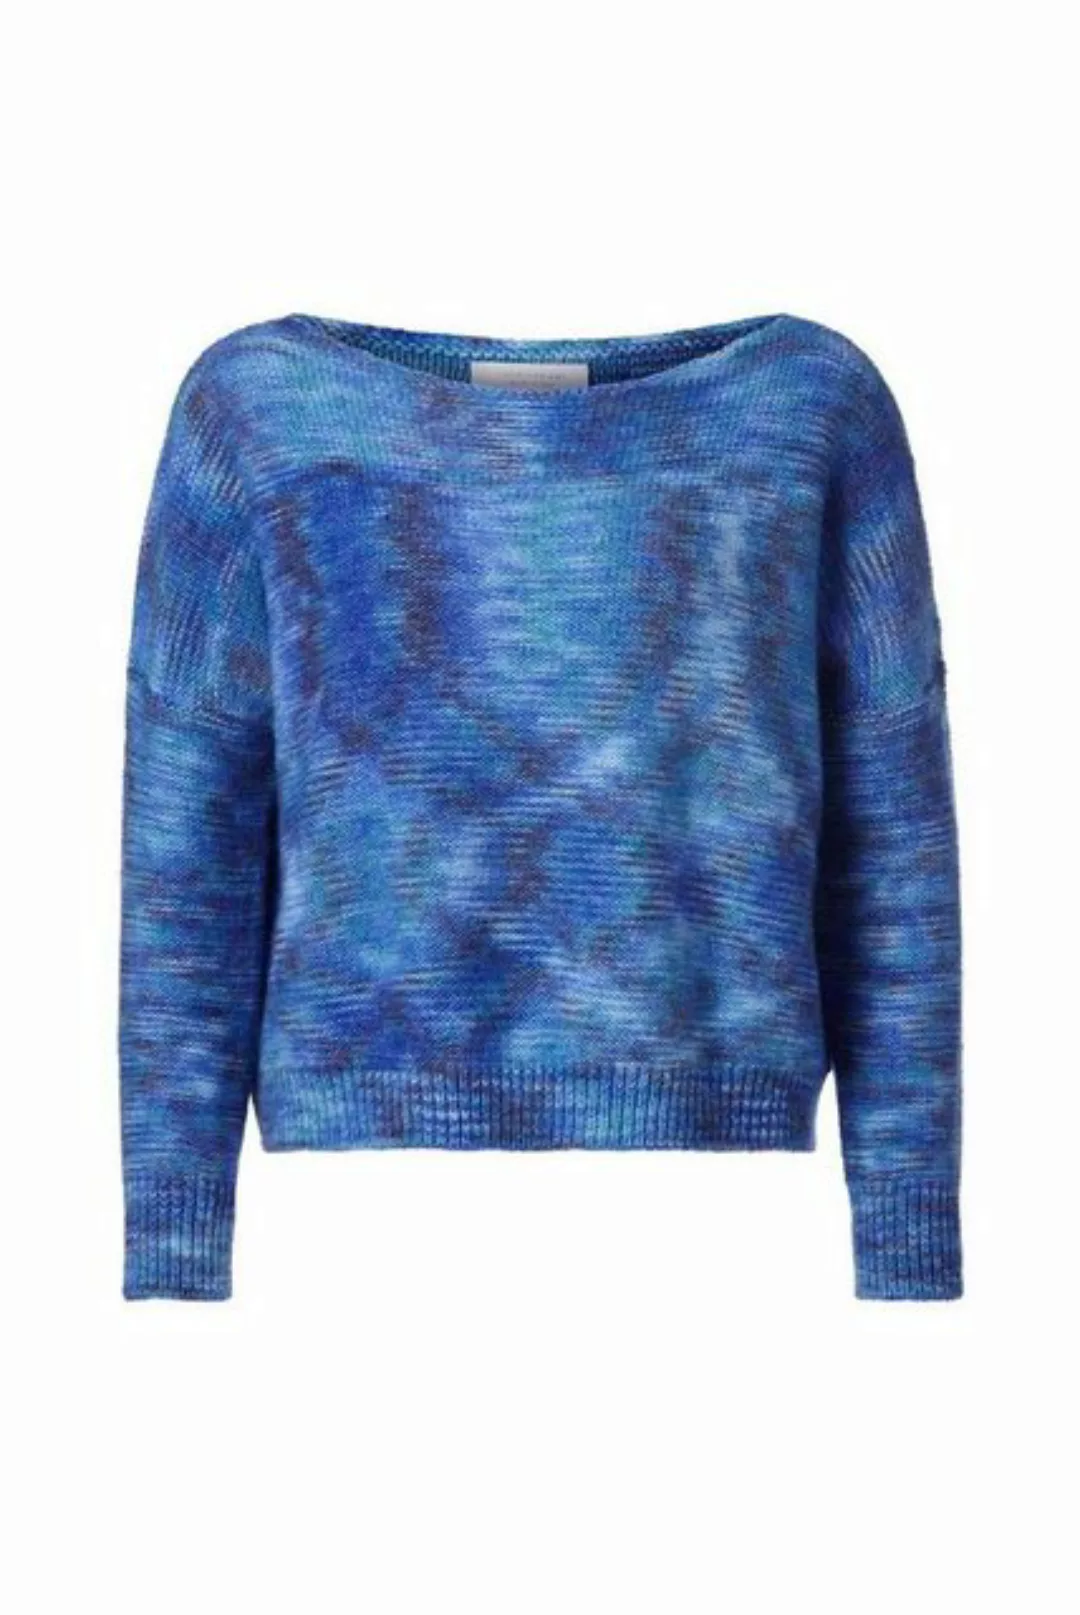 Rich & Royal Sweatshirt Boat neck print yarn pullover günstig online kaufen